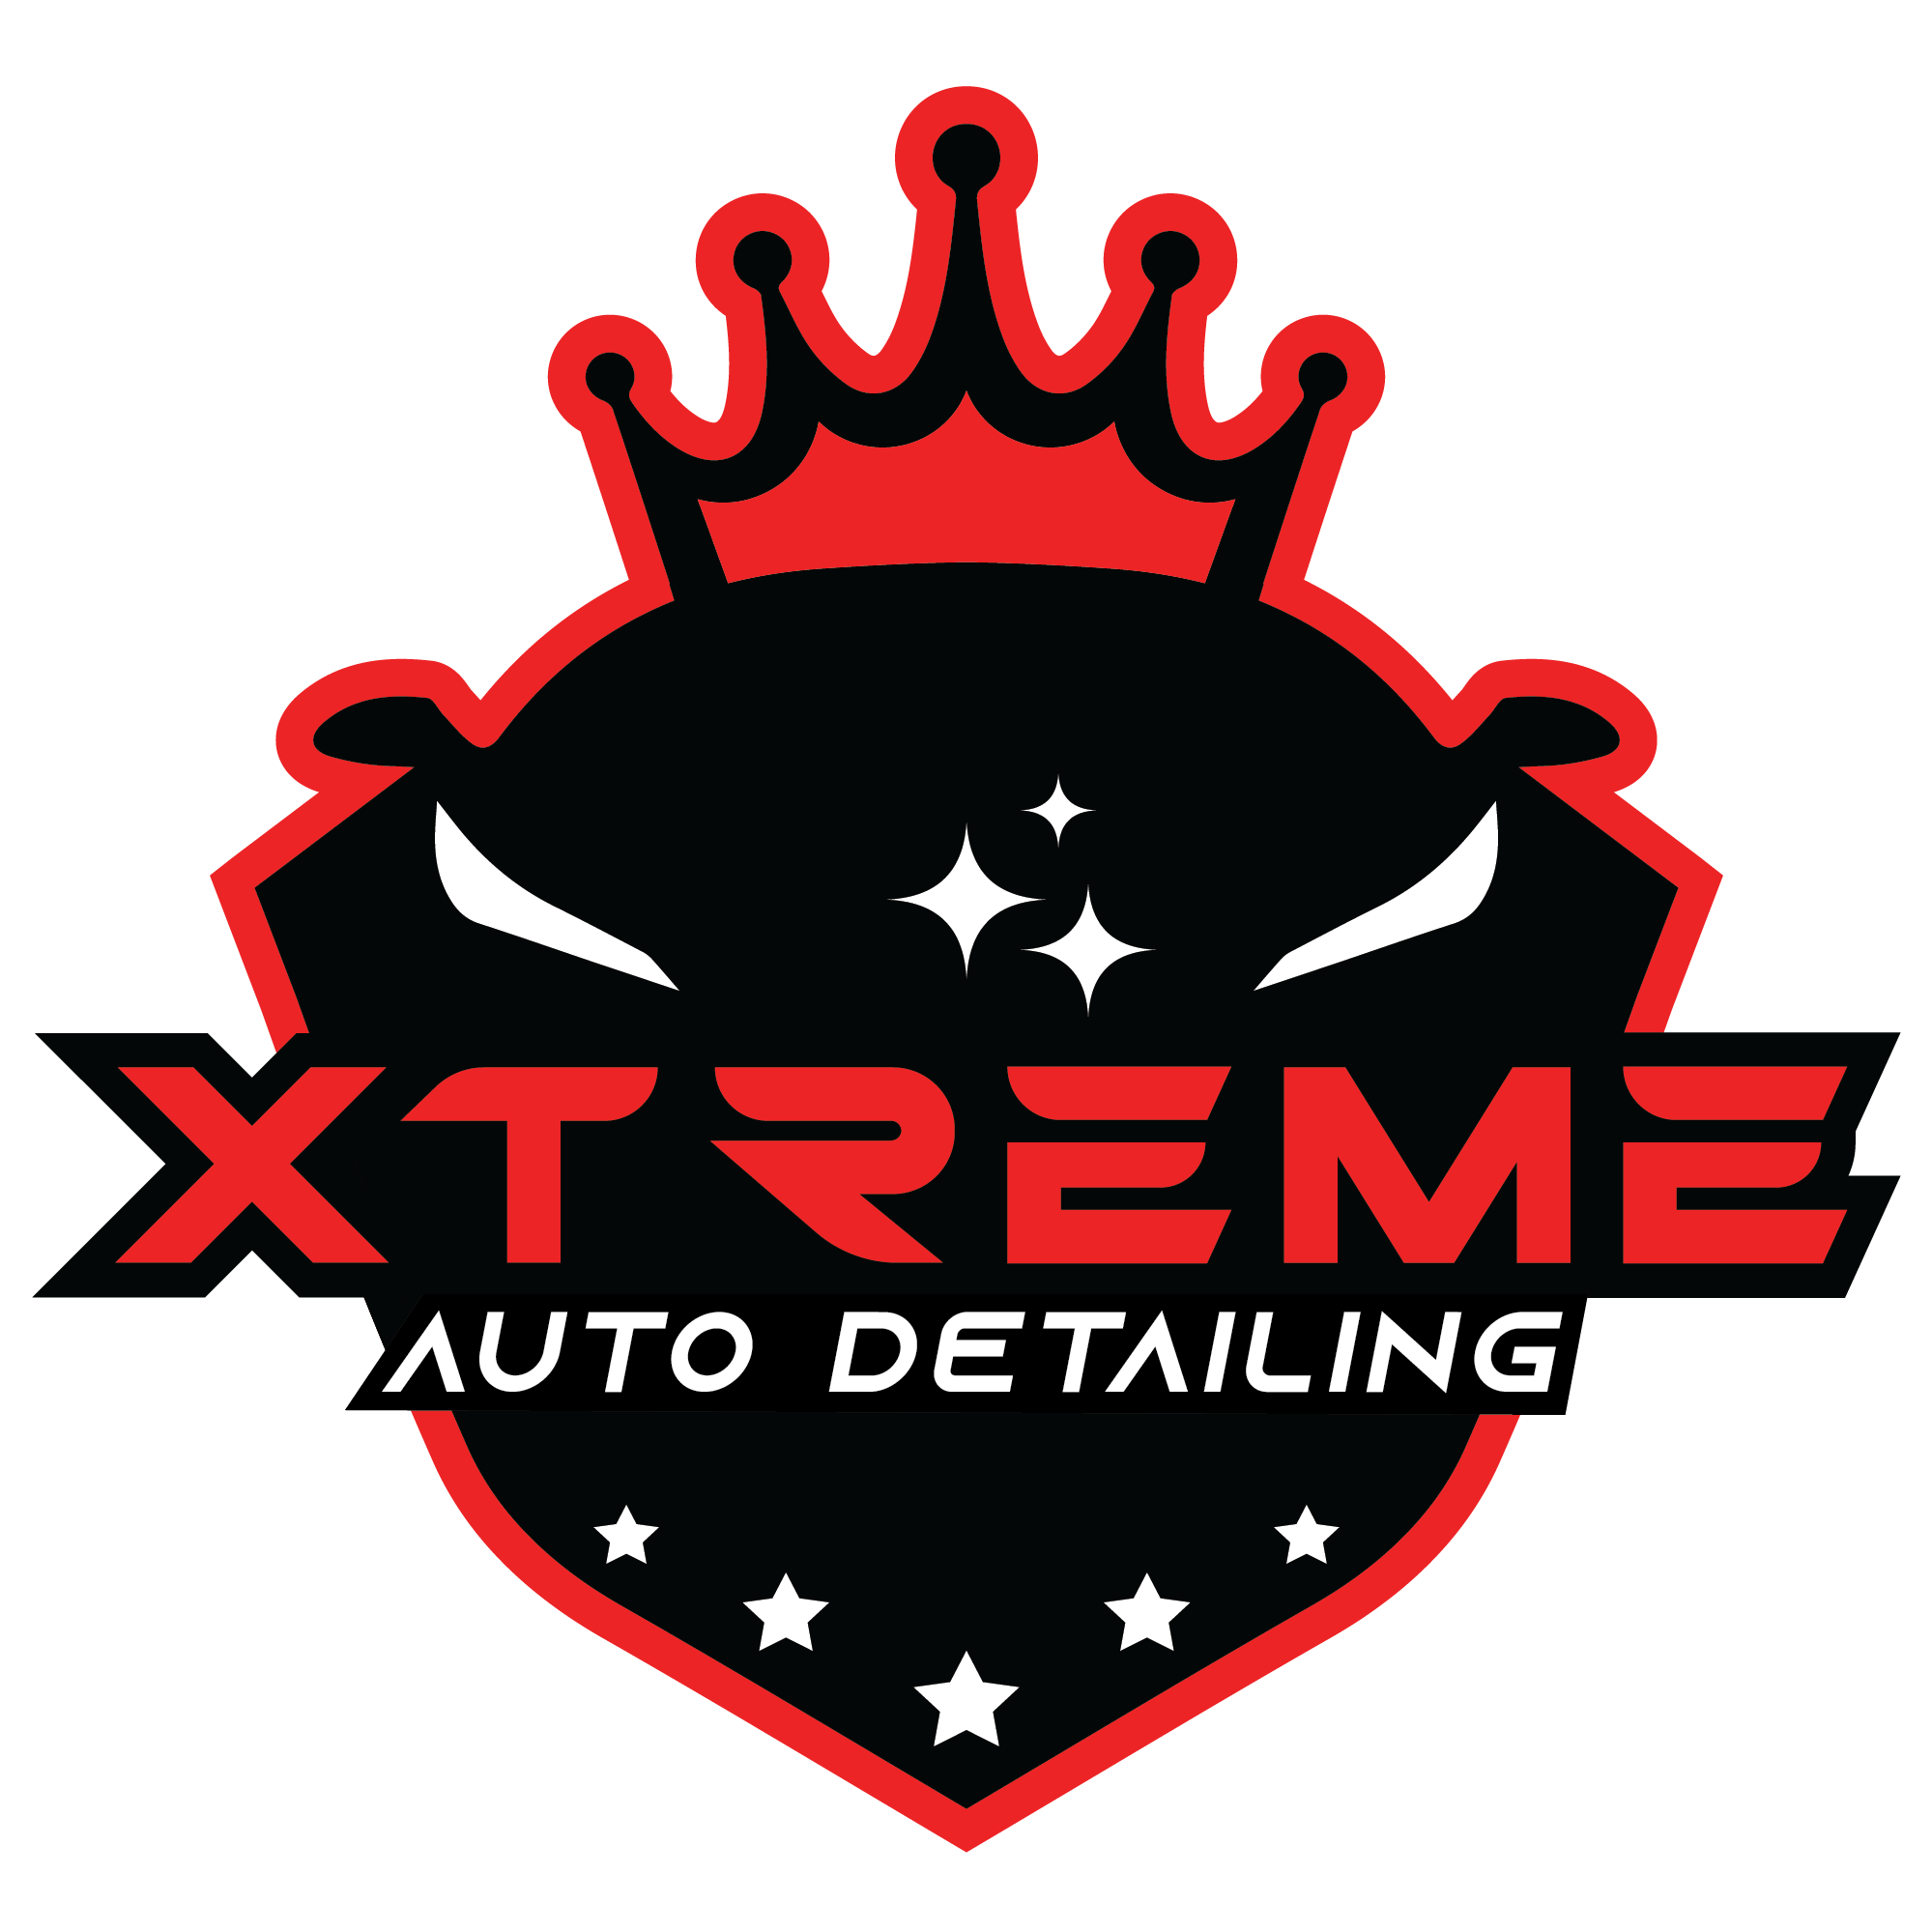 Xtreme Auto Detailing